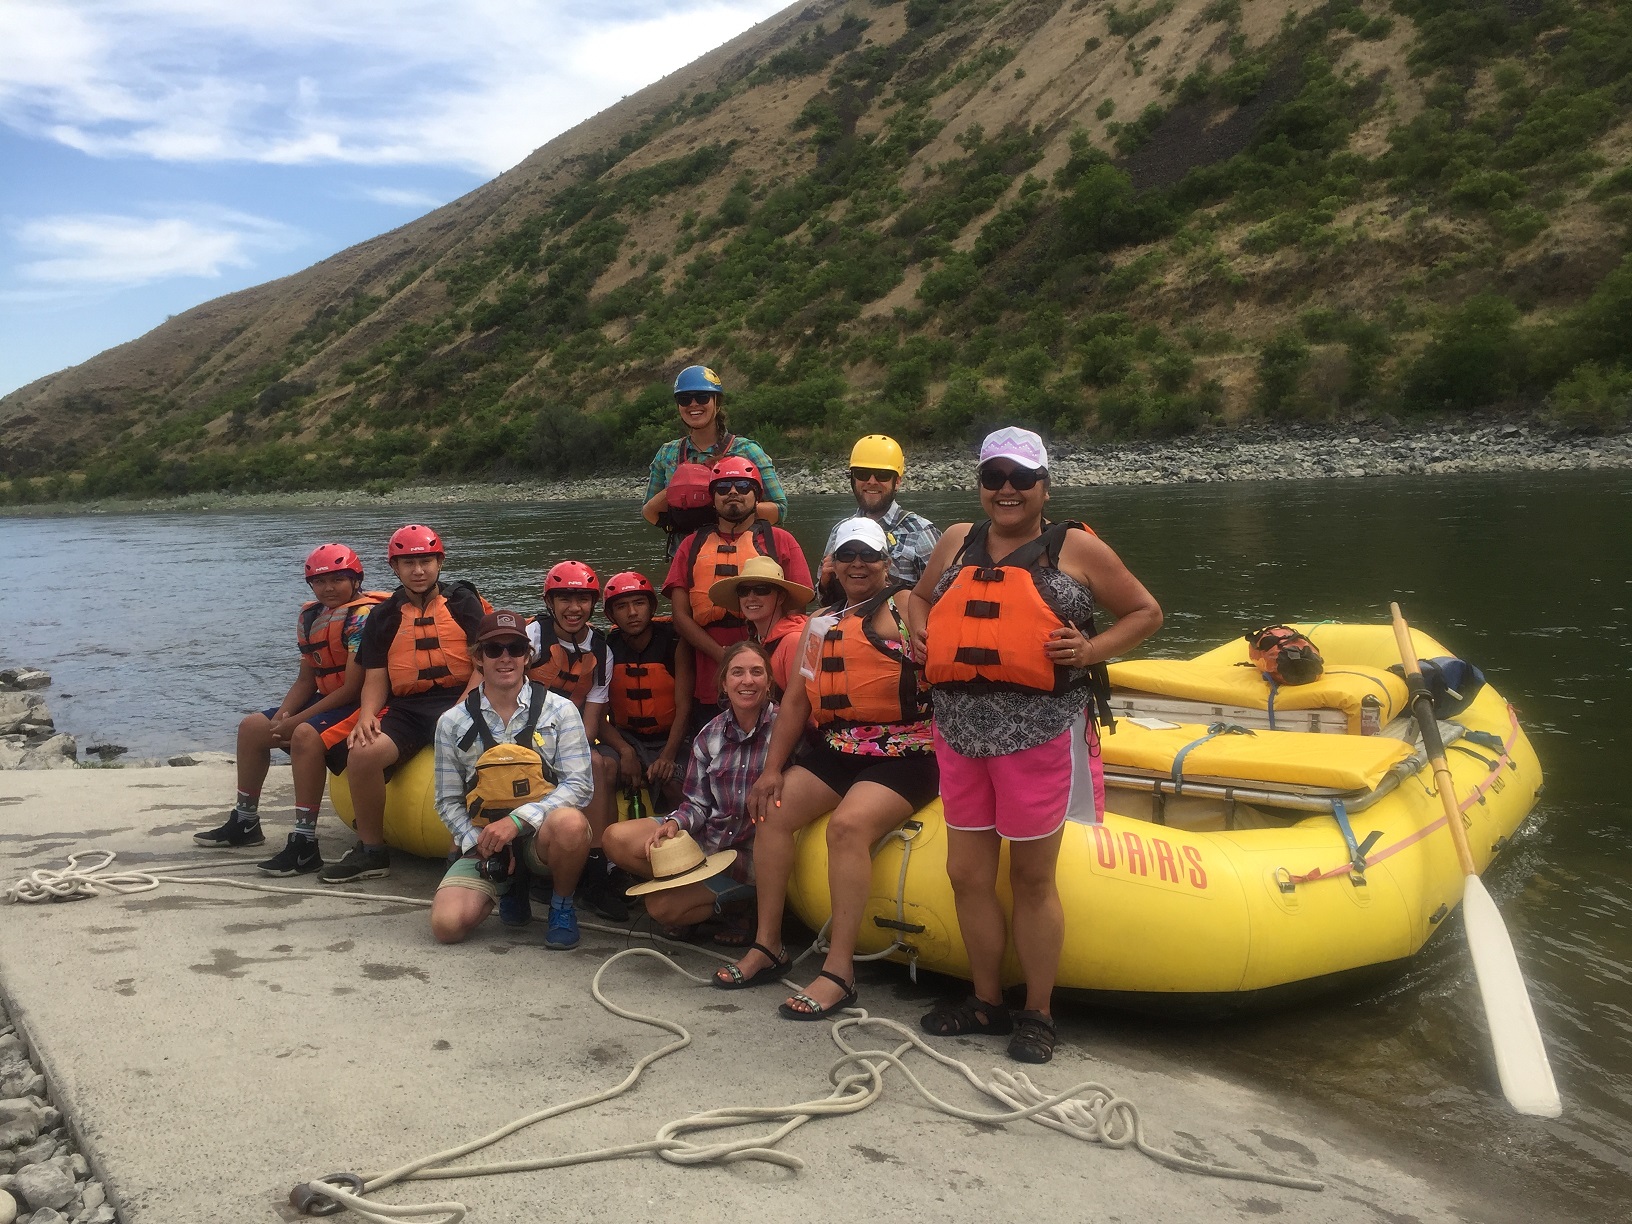 Nez Perce Teens Discover Their Backyard River